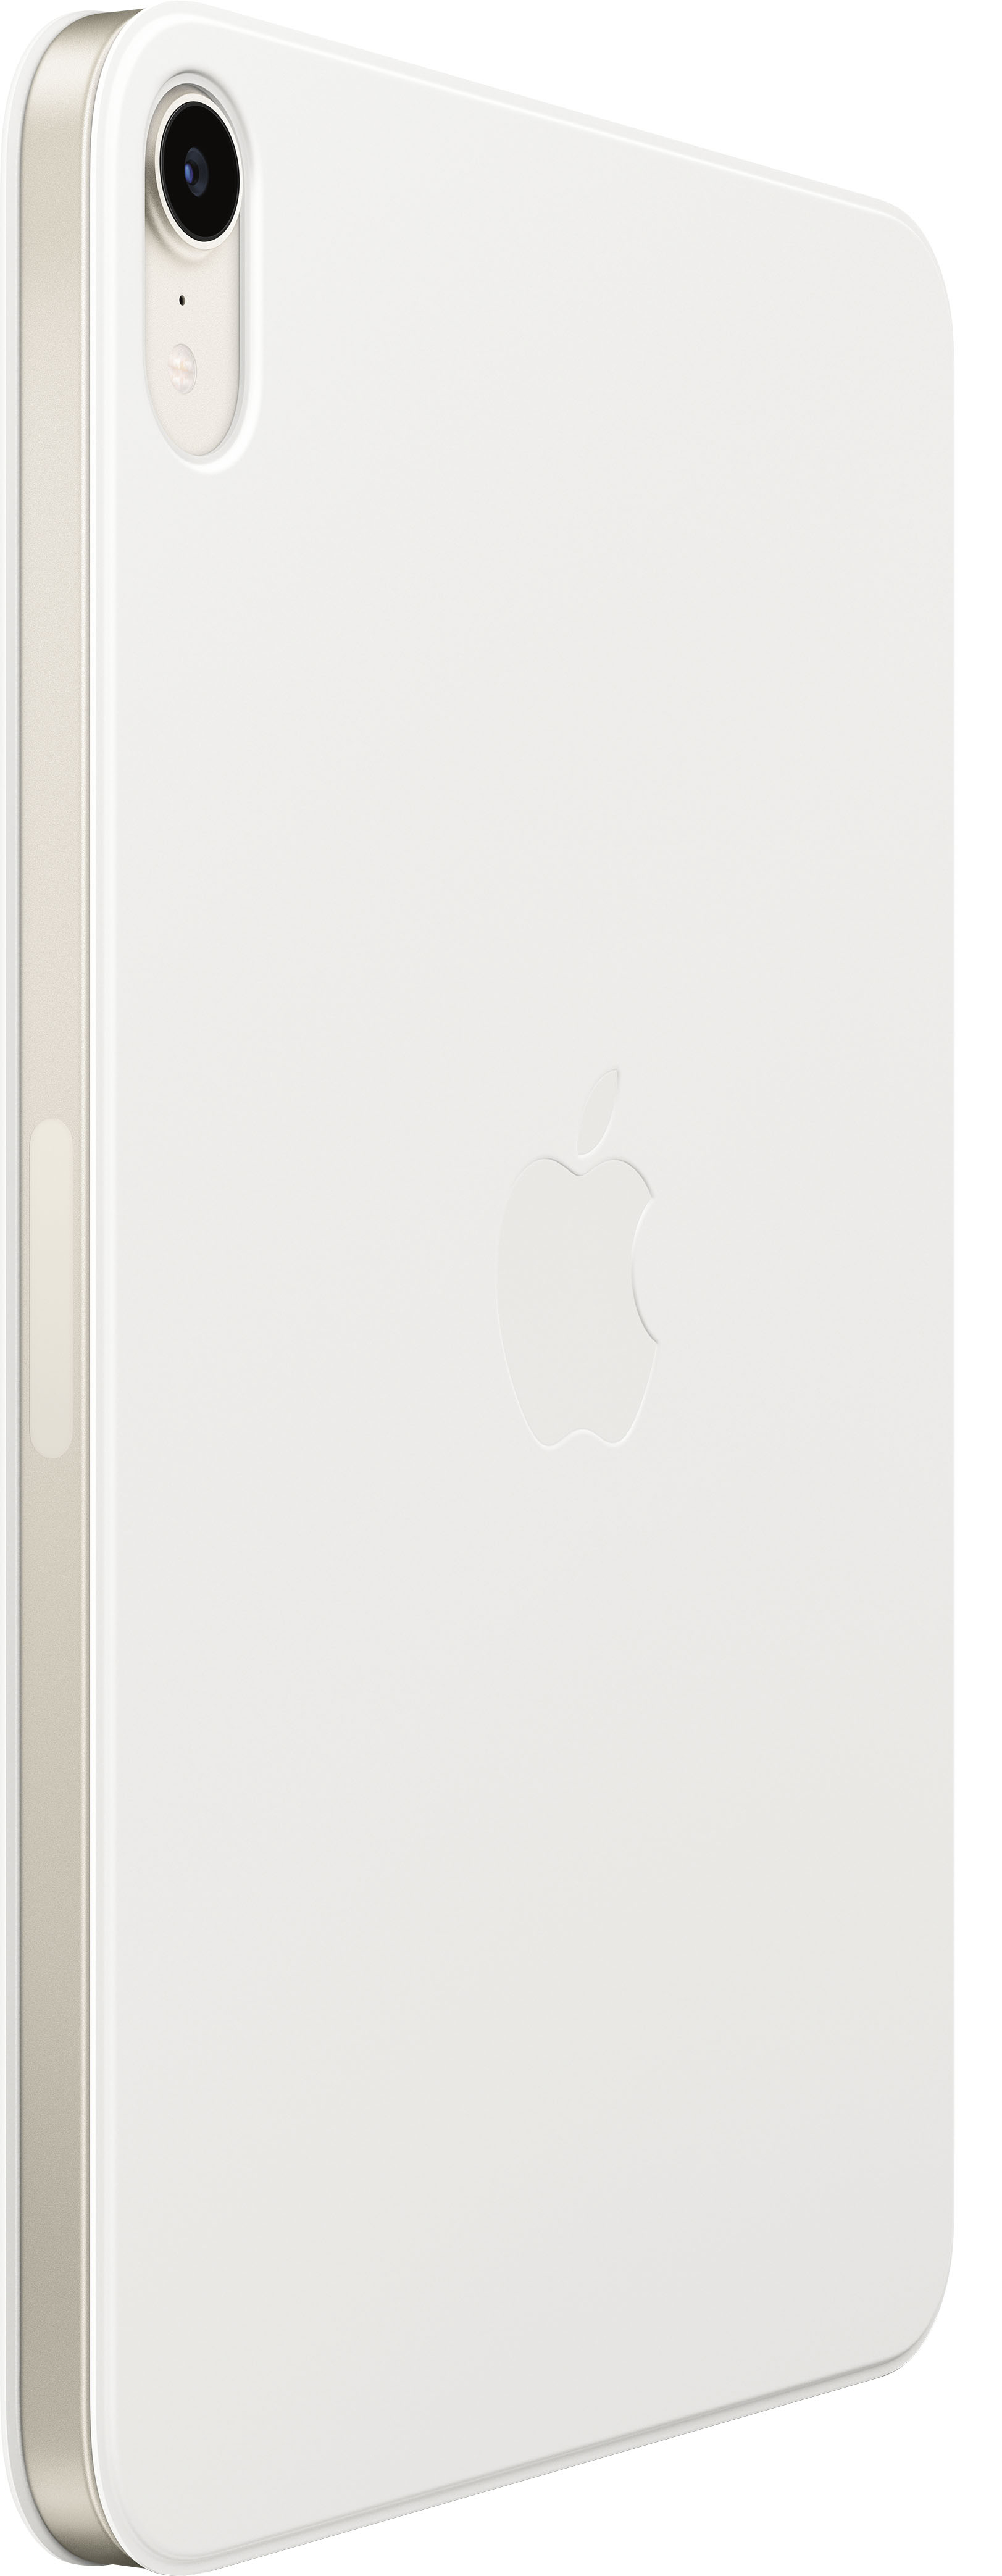 white ipad mini box